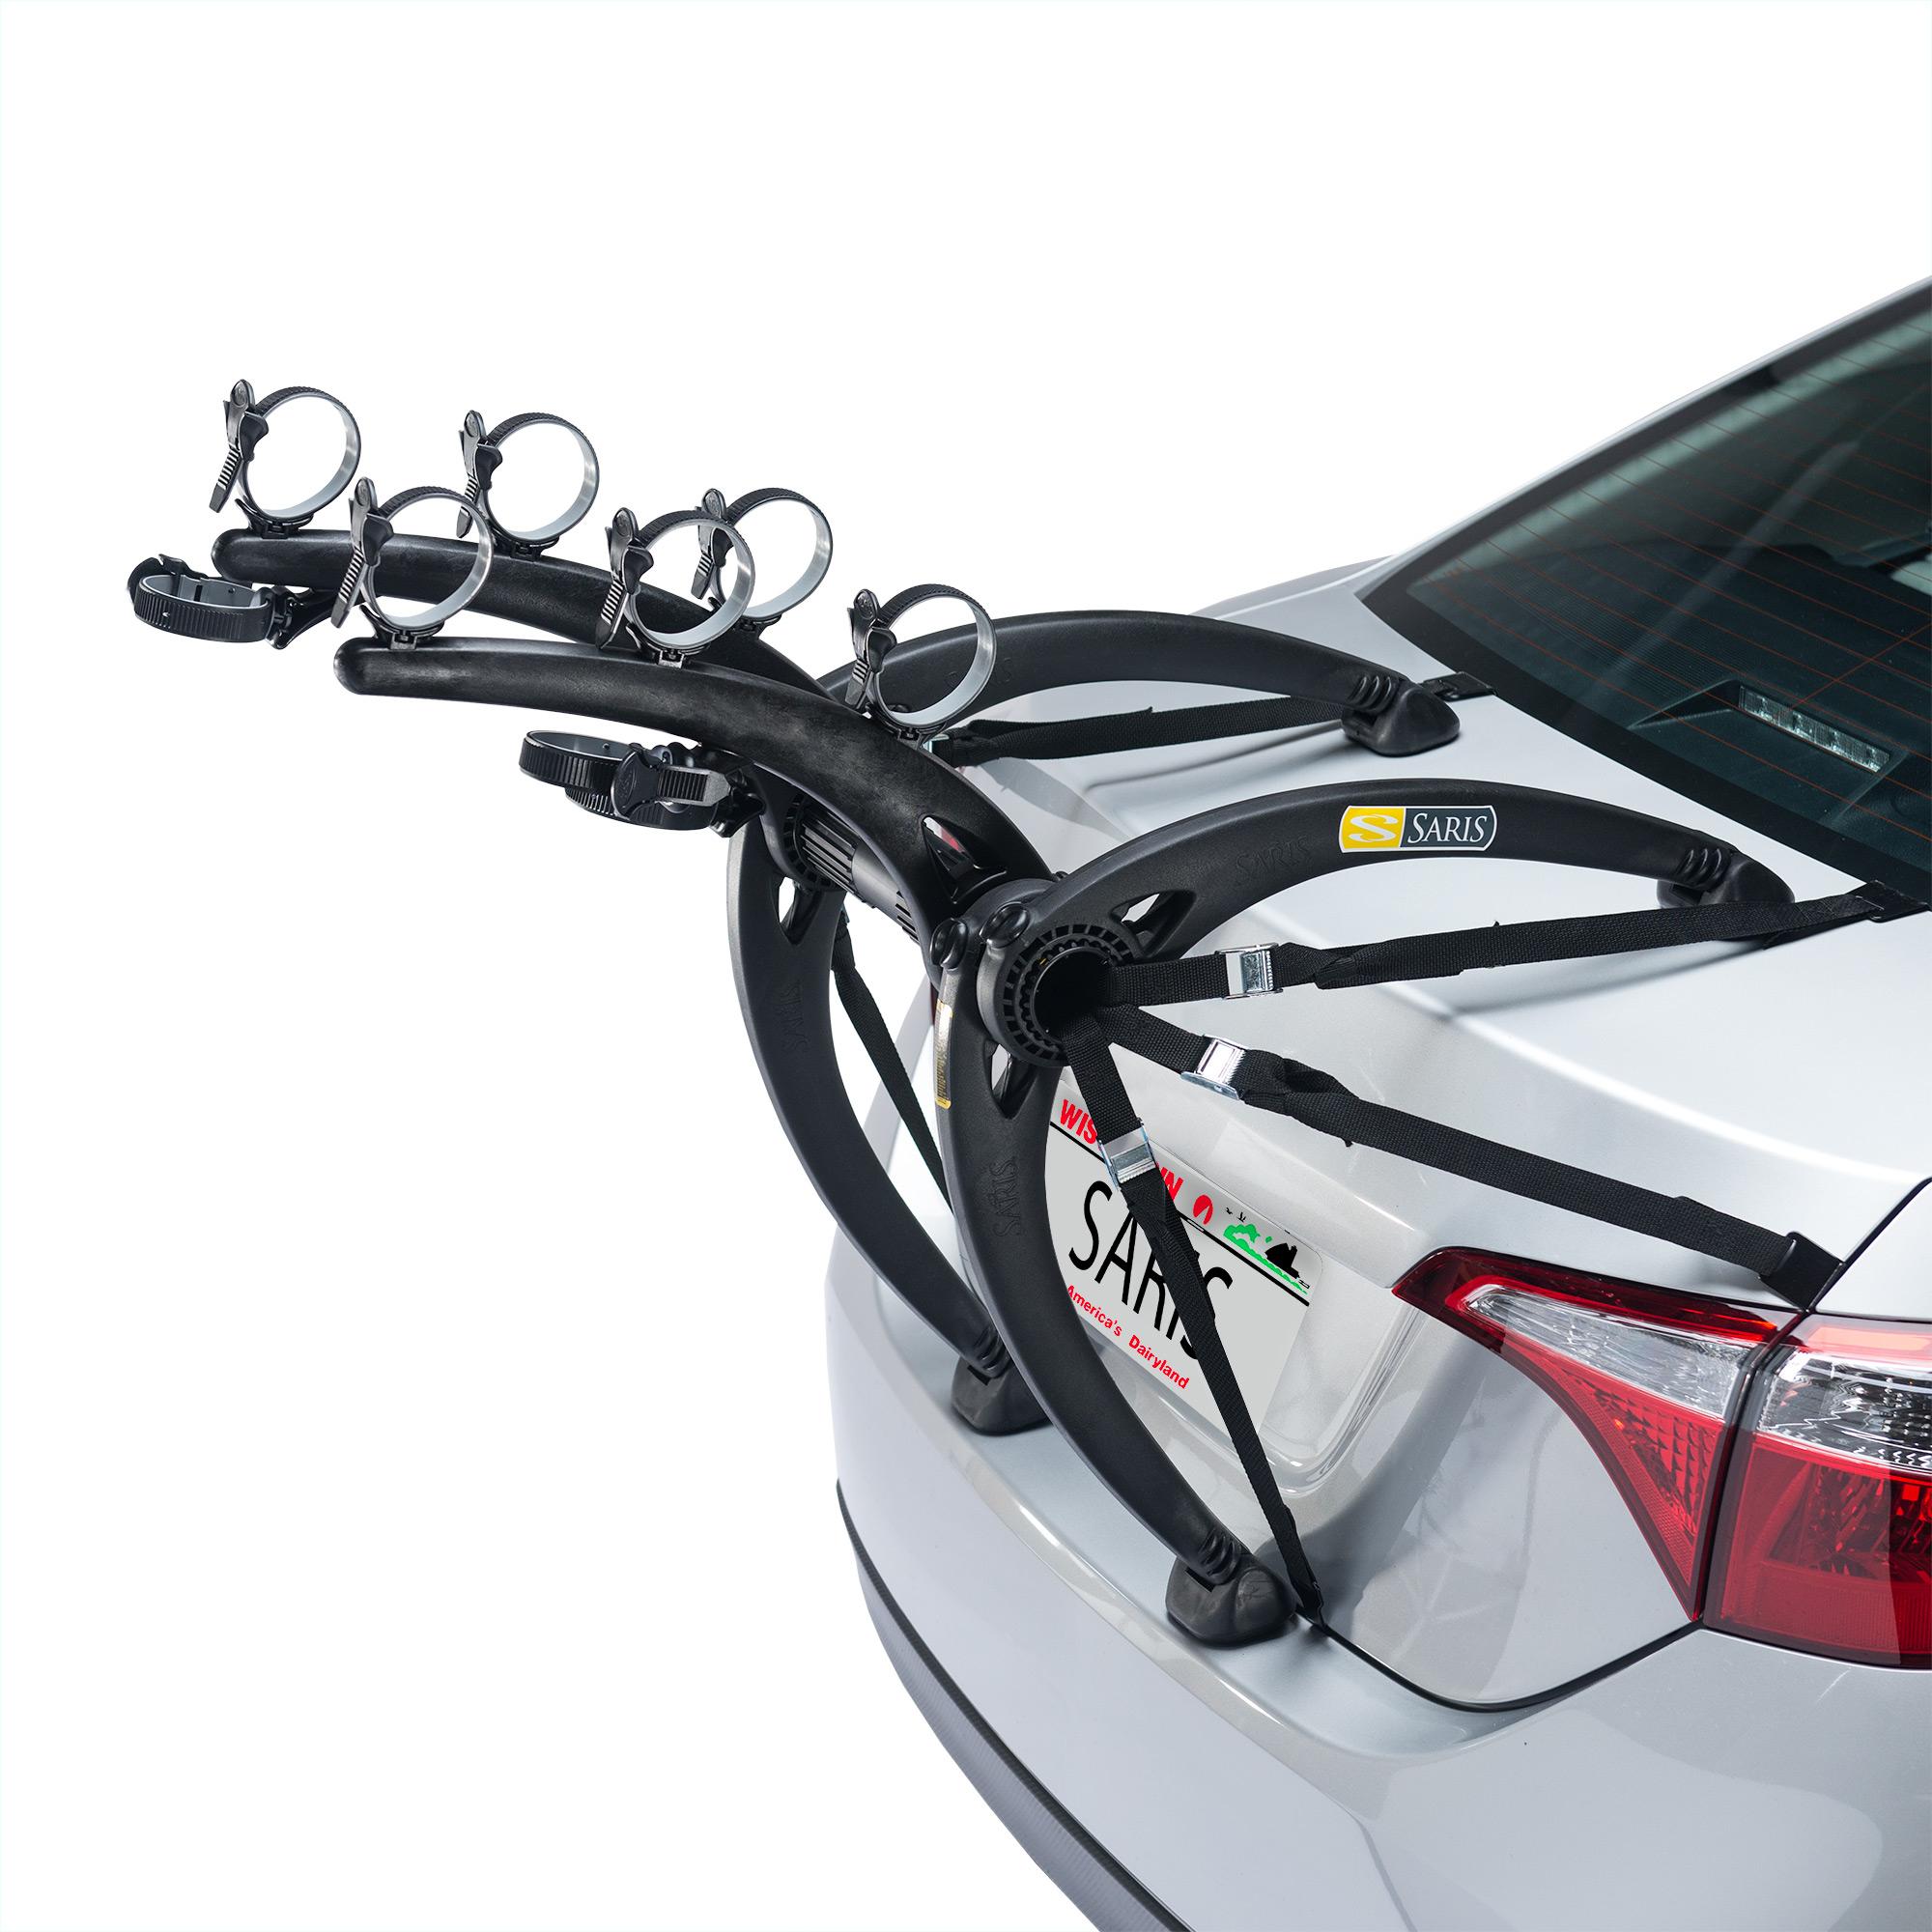 Bike rack for UC250h? - Lexus UX200, UX250 and UX250h Club - Lexus ...